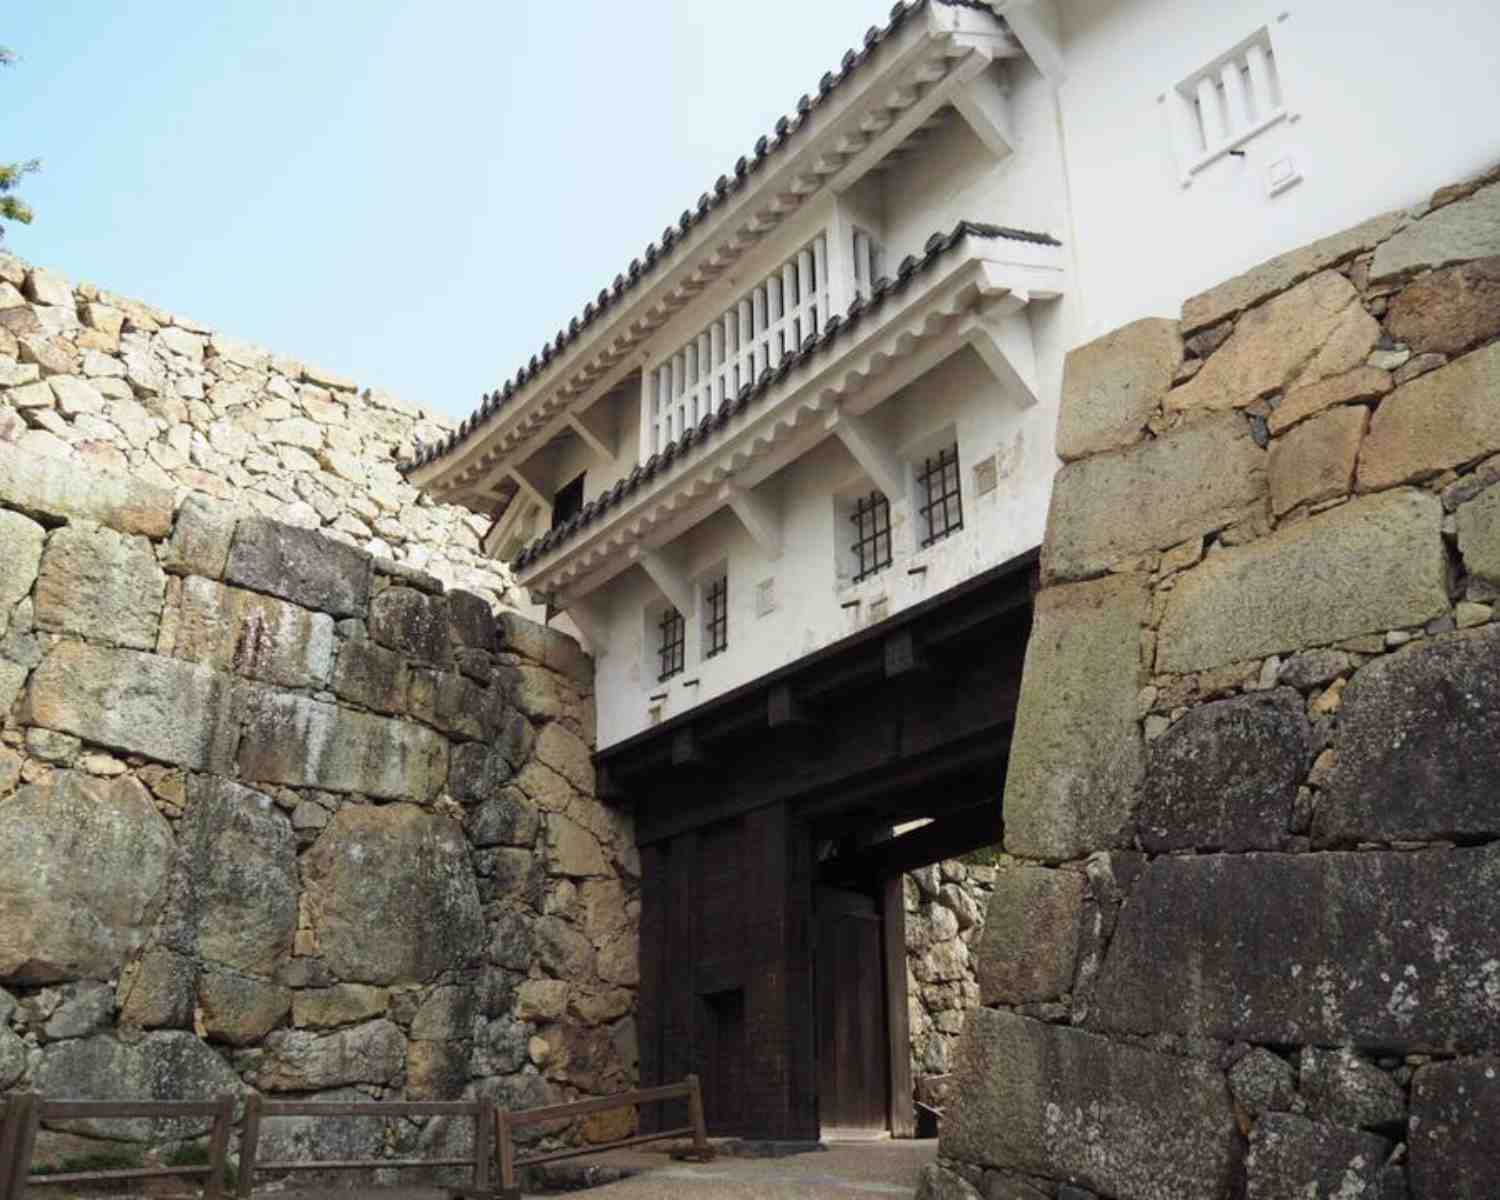 The many Gates and Entrances of Himeji Castle